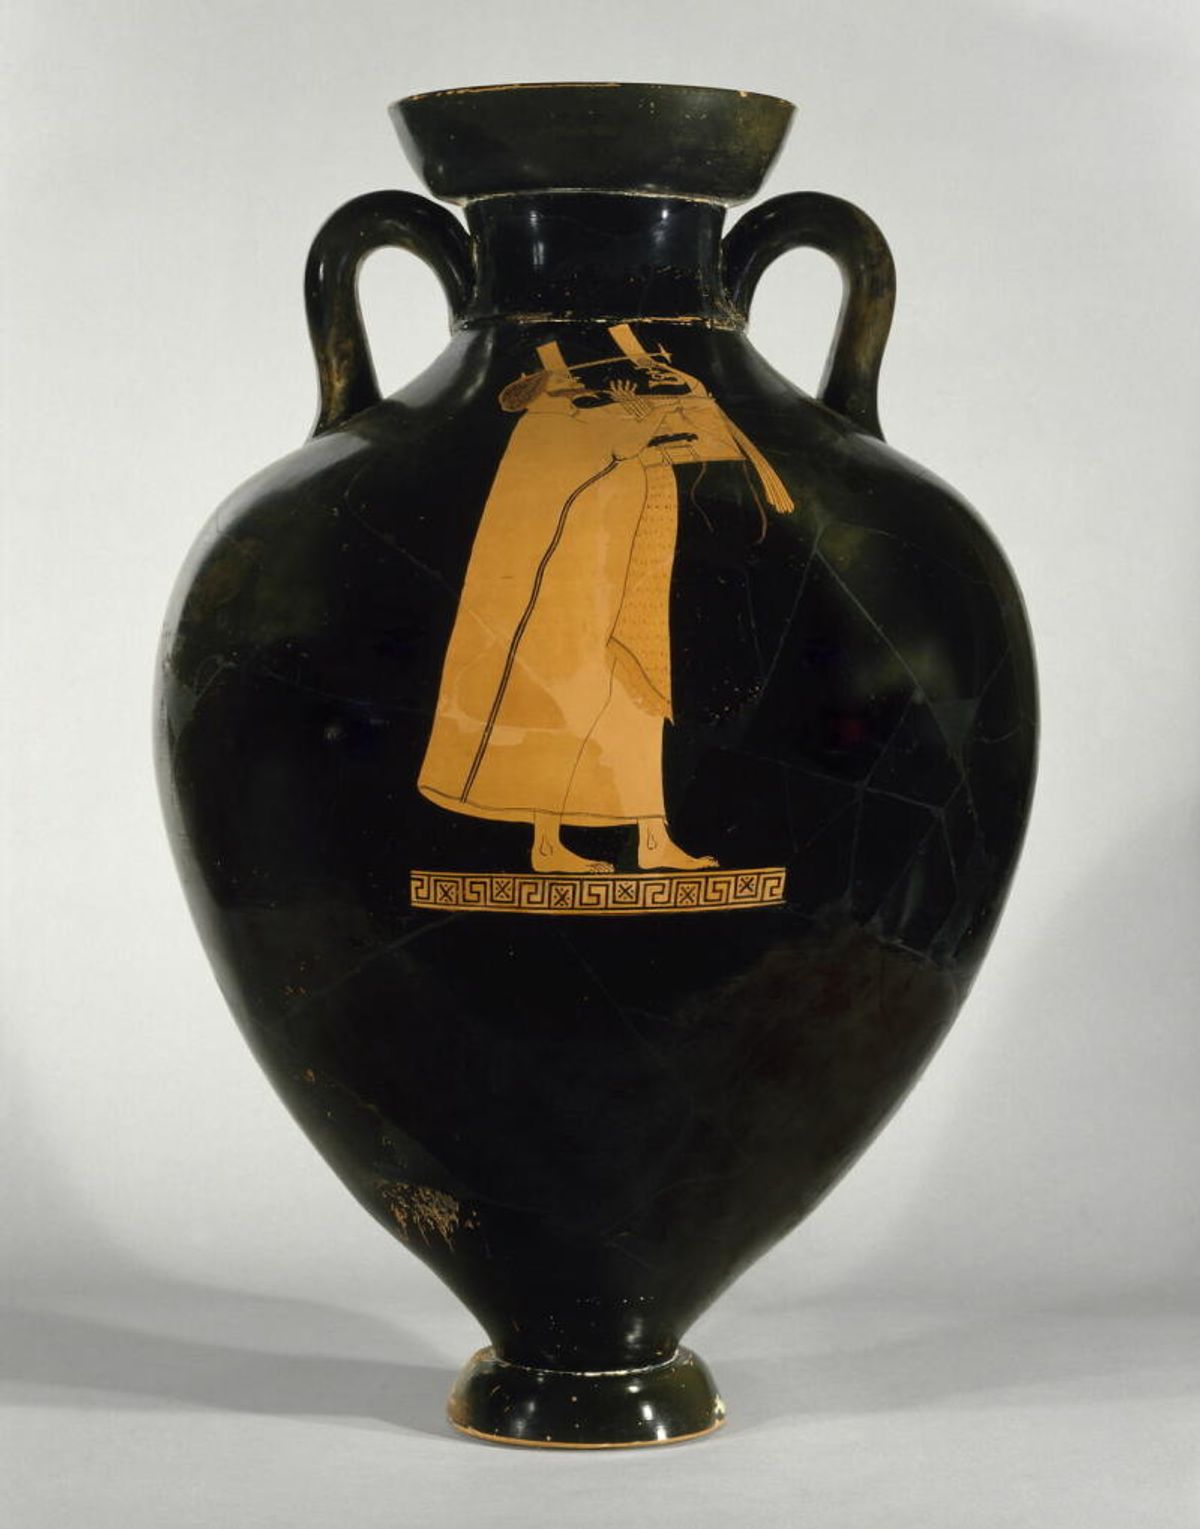 Amphora by the "painter of Berlin", 5th century BC

© RMN-Grand Palais (musée du Louvre) / Christian Larrieu